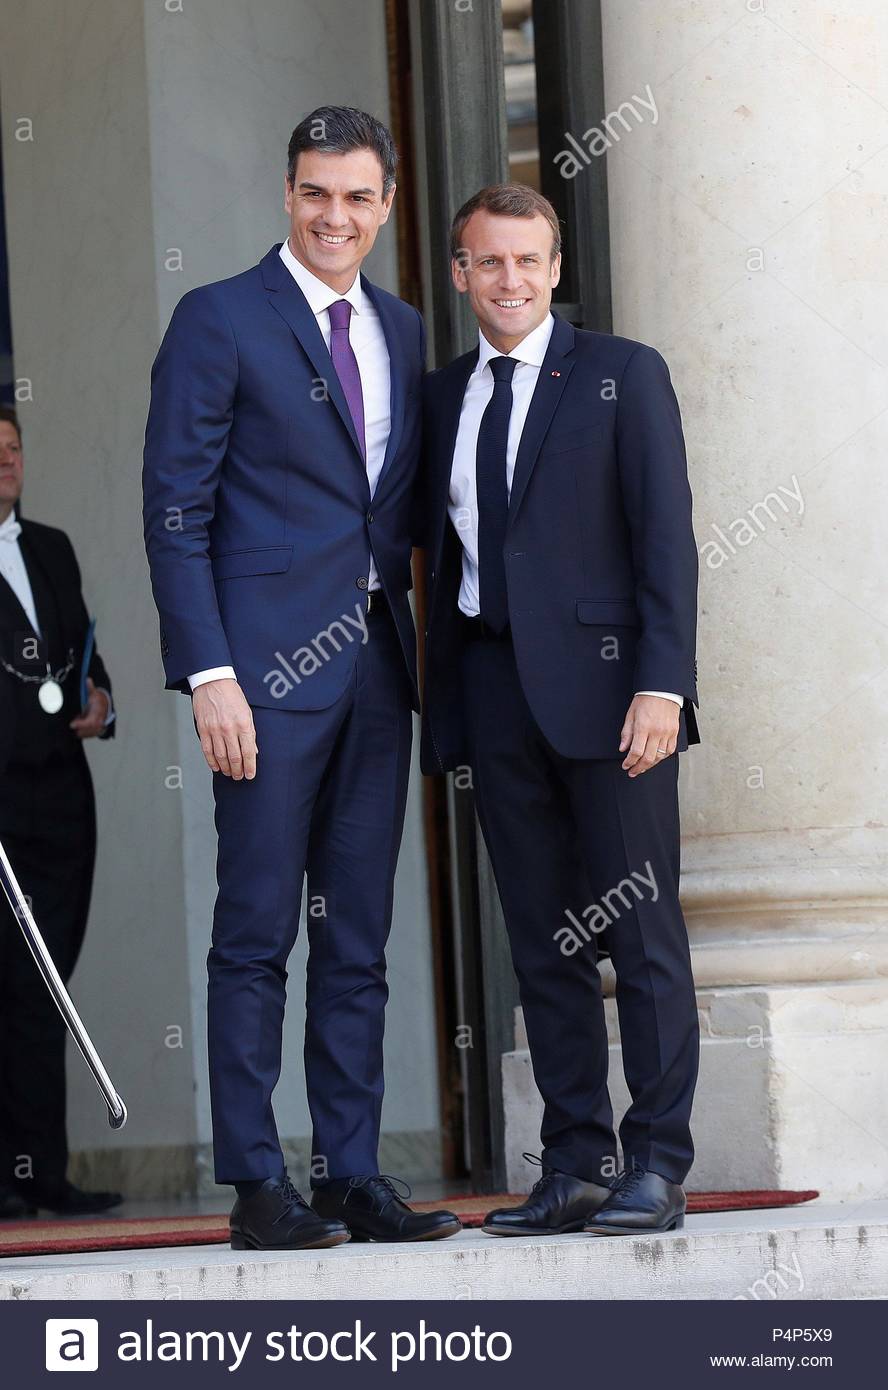 ¿Cuánto mide Emmanuel Macron? - Altura - Real height Save_227